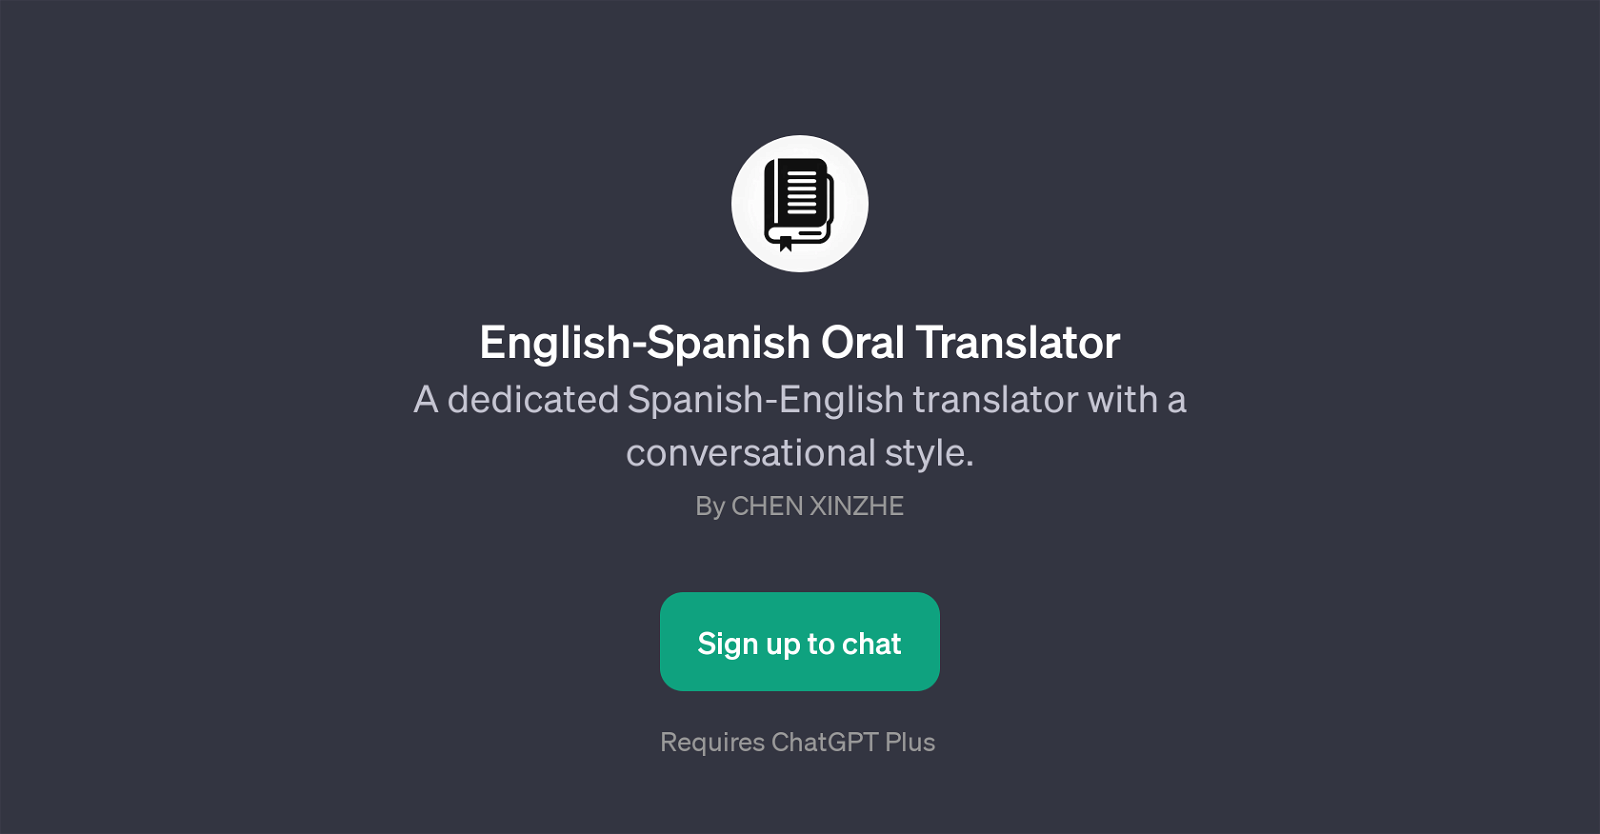 English-Spanish Oral Translator website